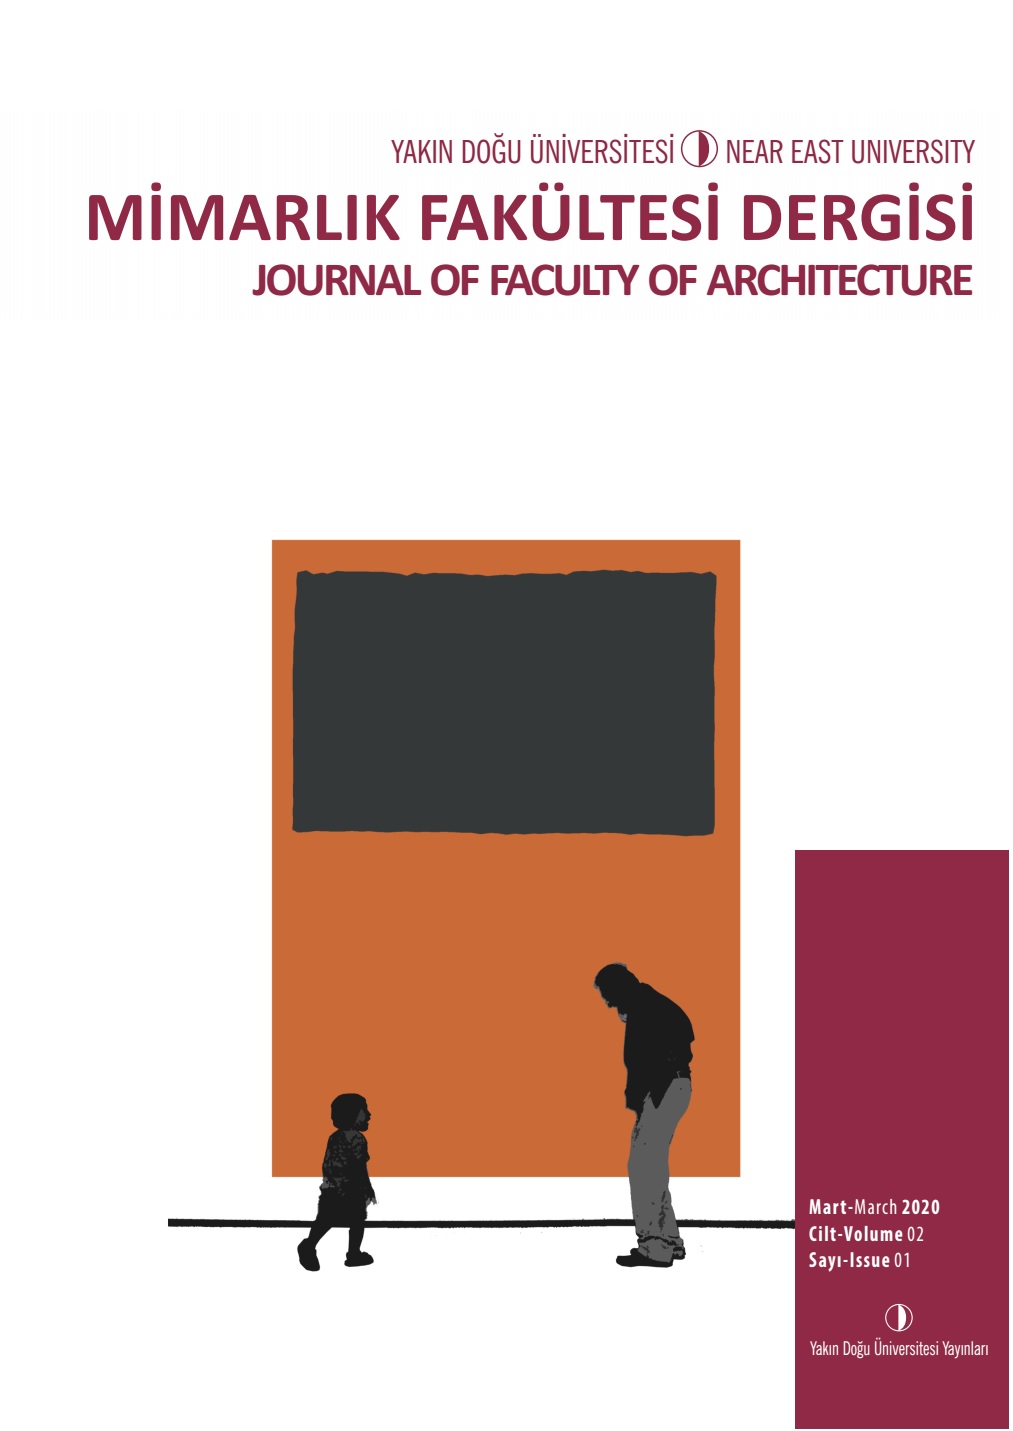 					Cilt 2 Sayı 1 (2020): Mimarlık Fakültesi Dergisi Gör
				